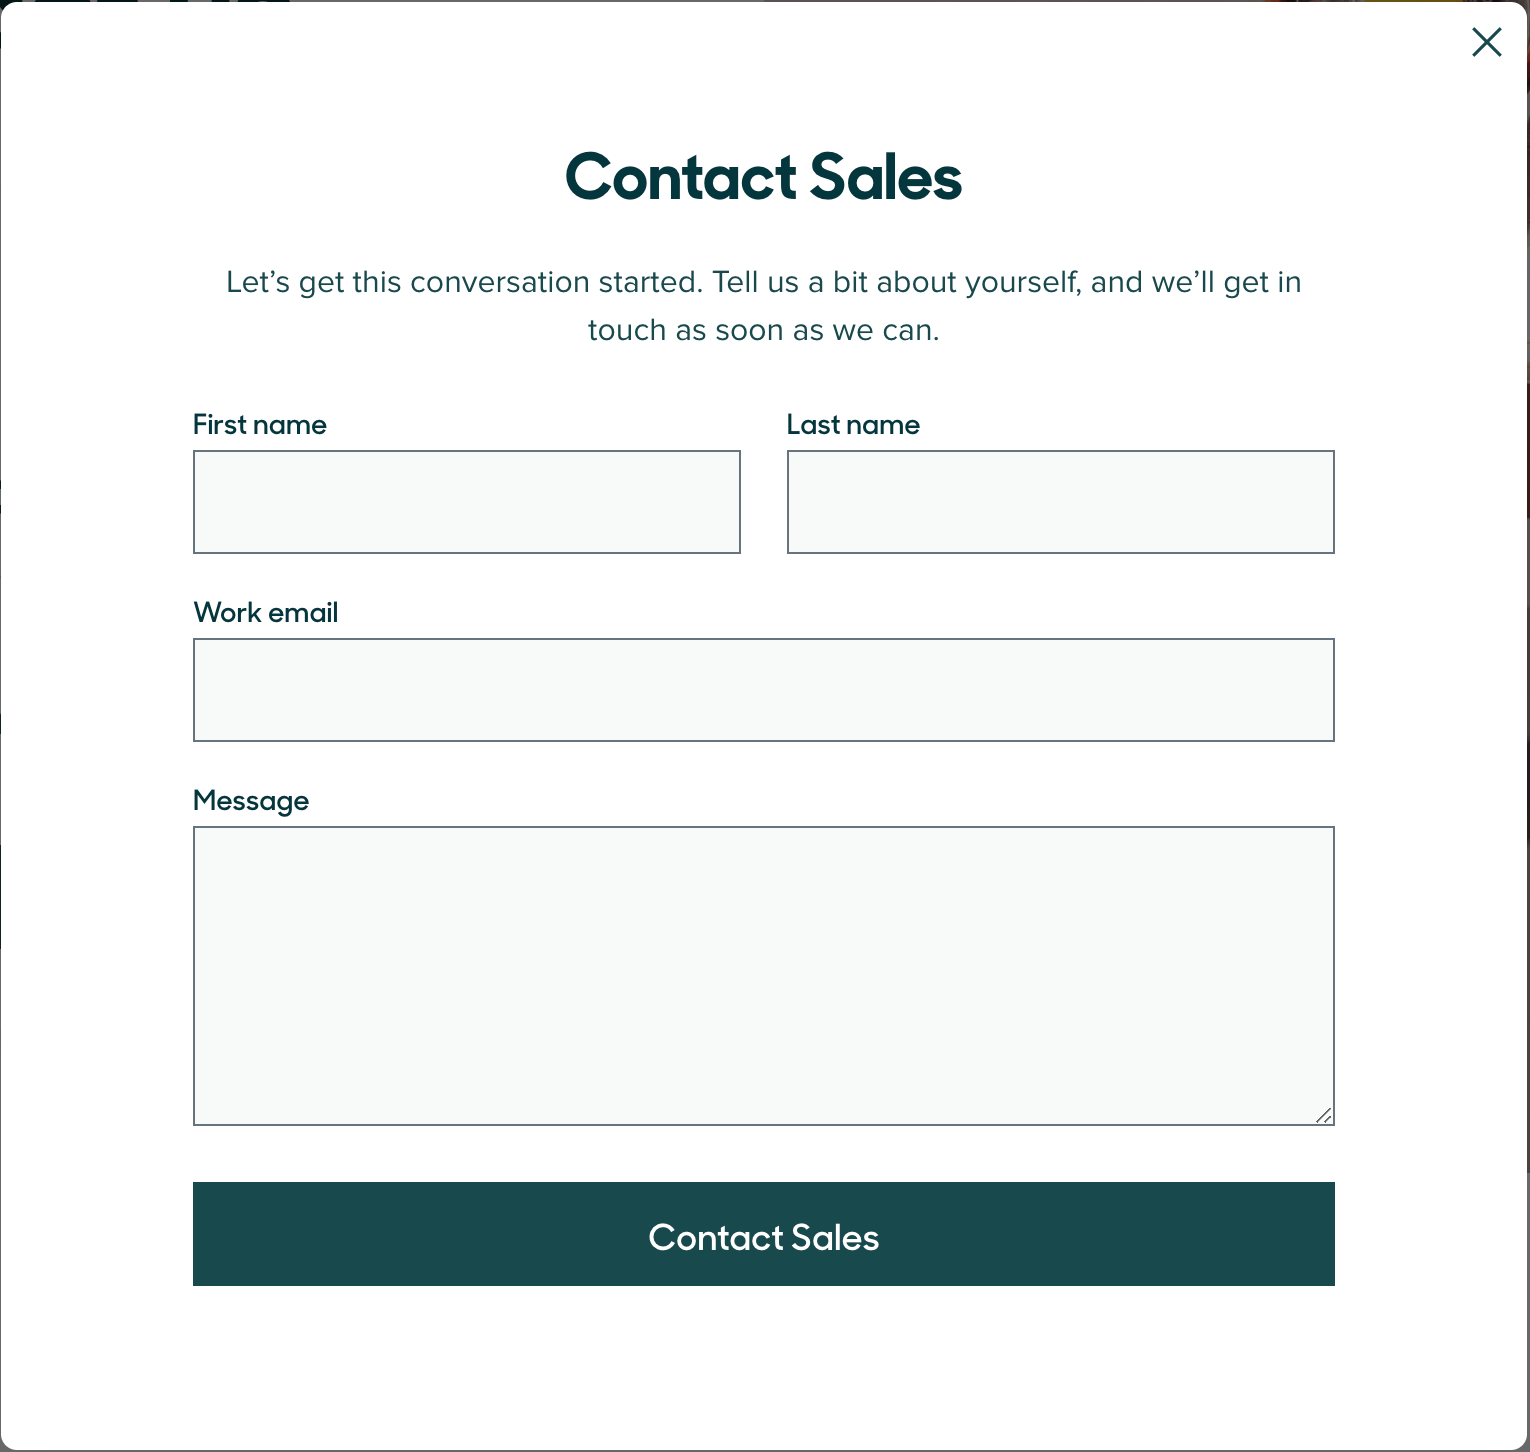 Zendesk's Contact Sales form